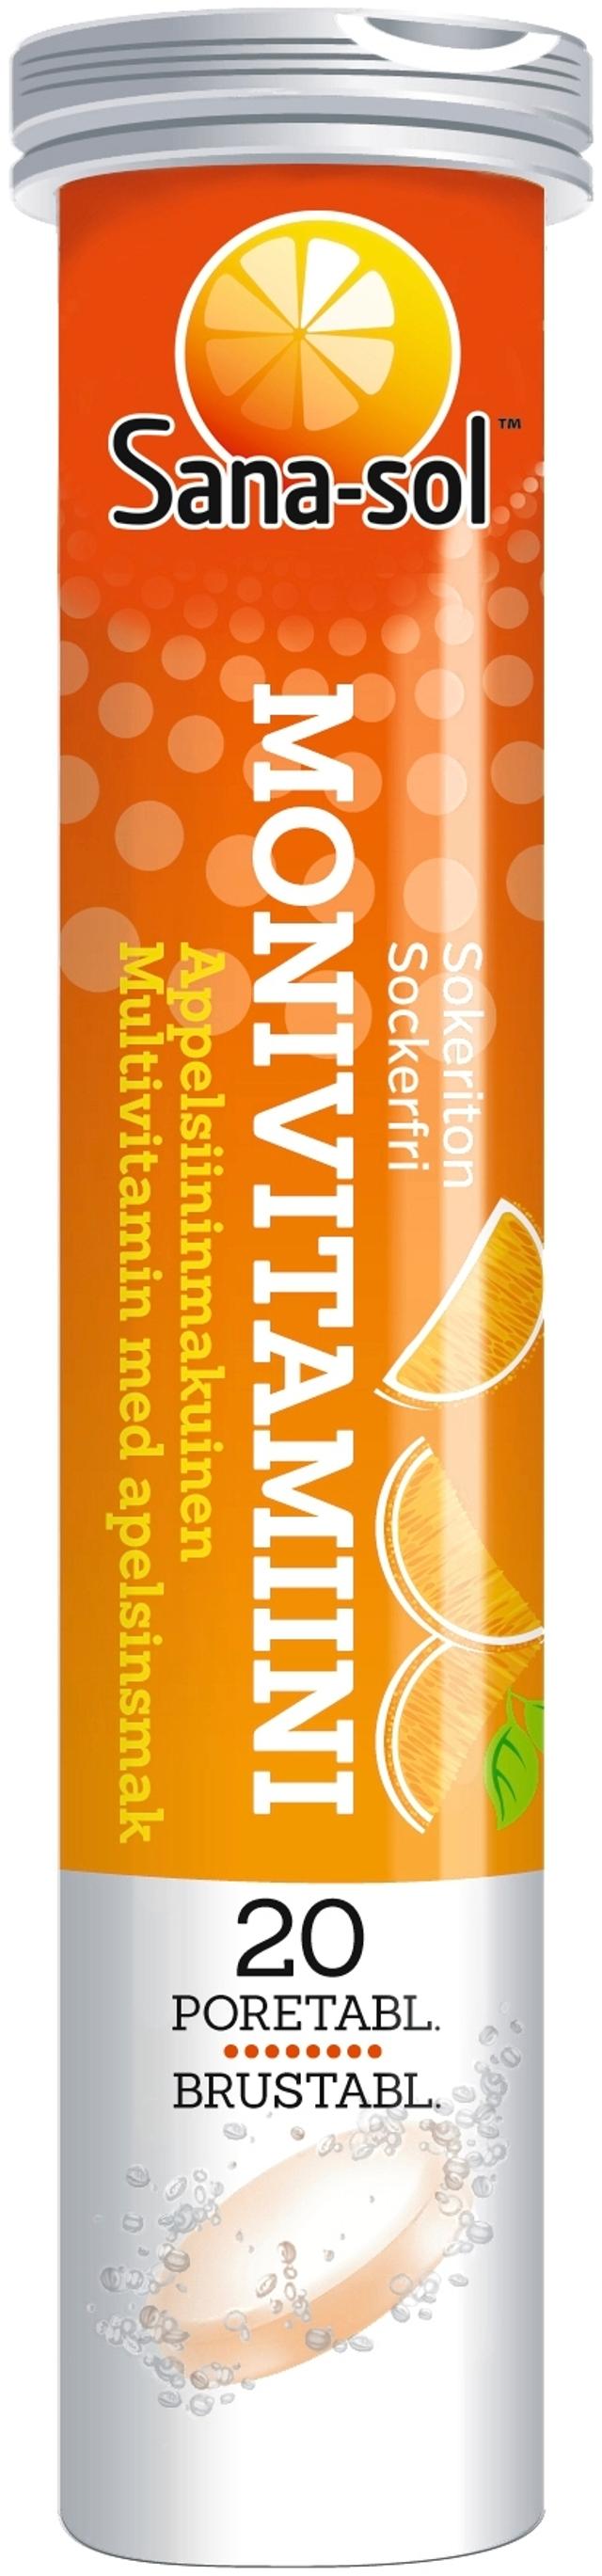 Sana-sol Monivitamiini sokeriton appelsiininmakuinen monivitamiiniporetabletti 20 poretablettia